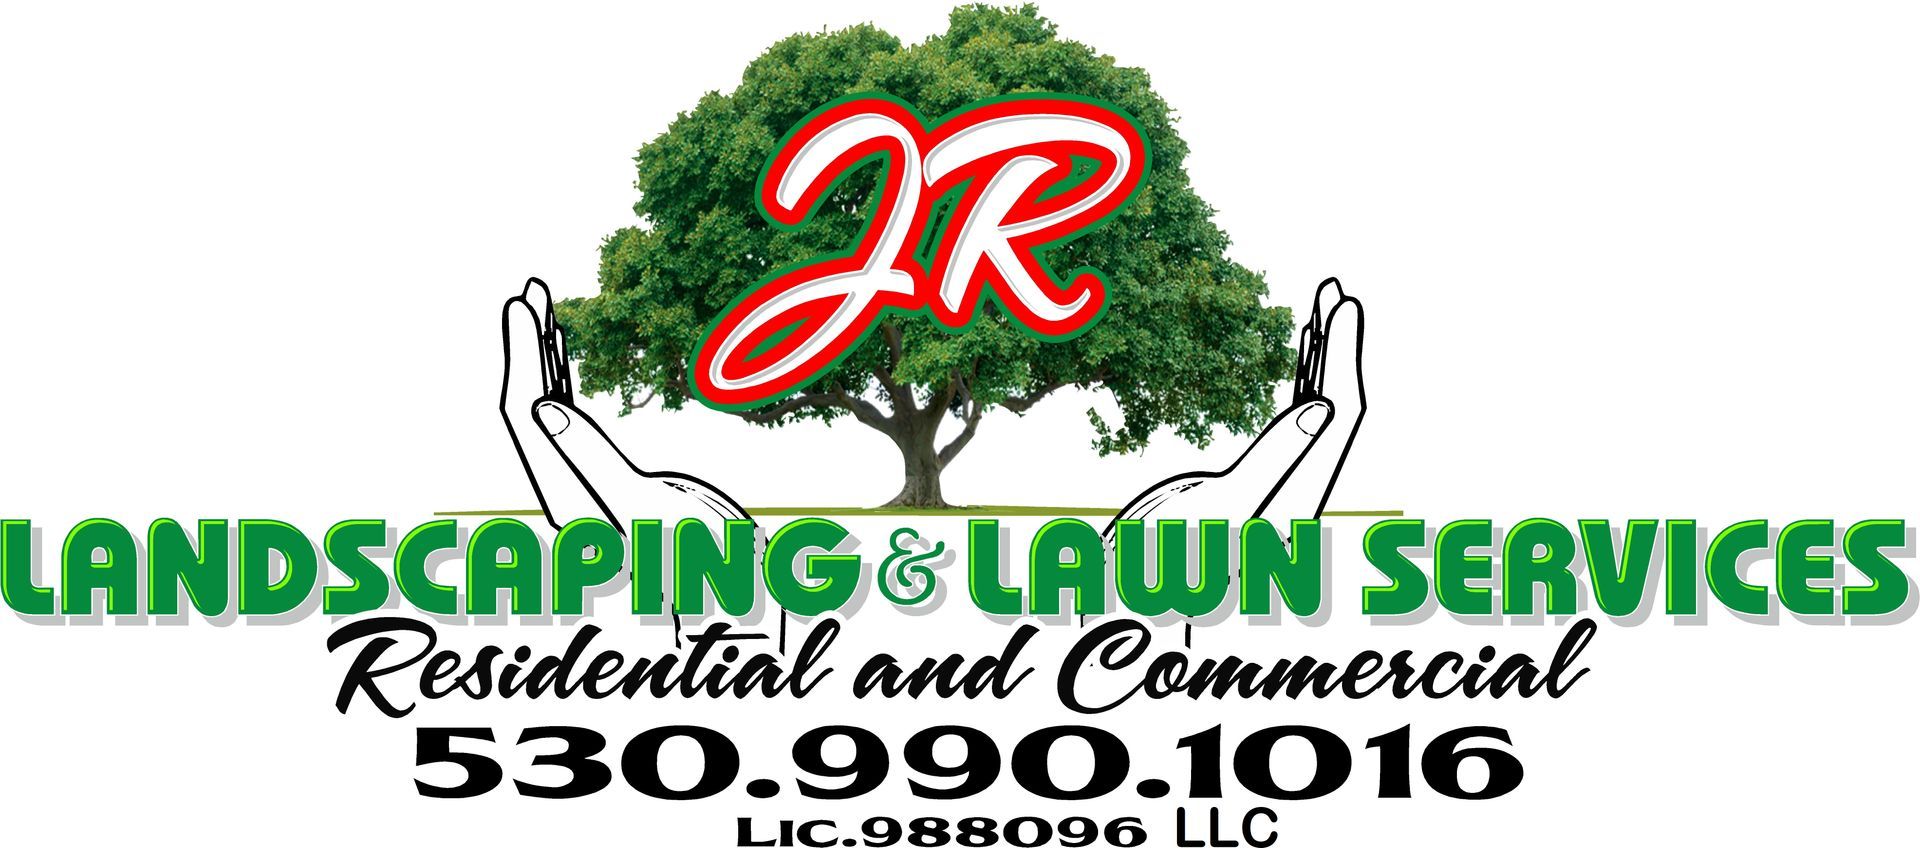 JR Landscaping & Lawn Services